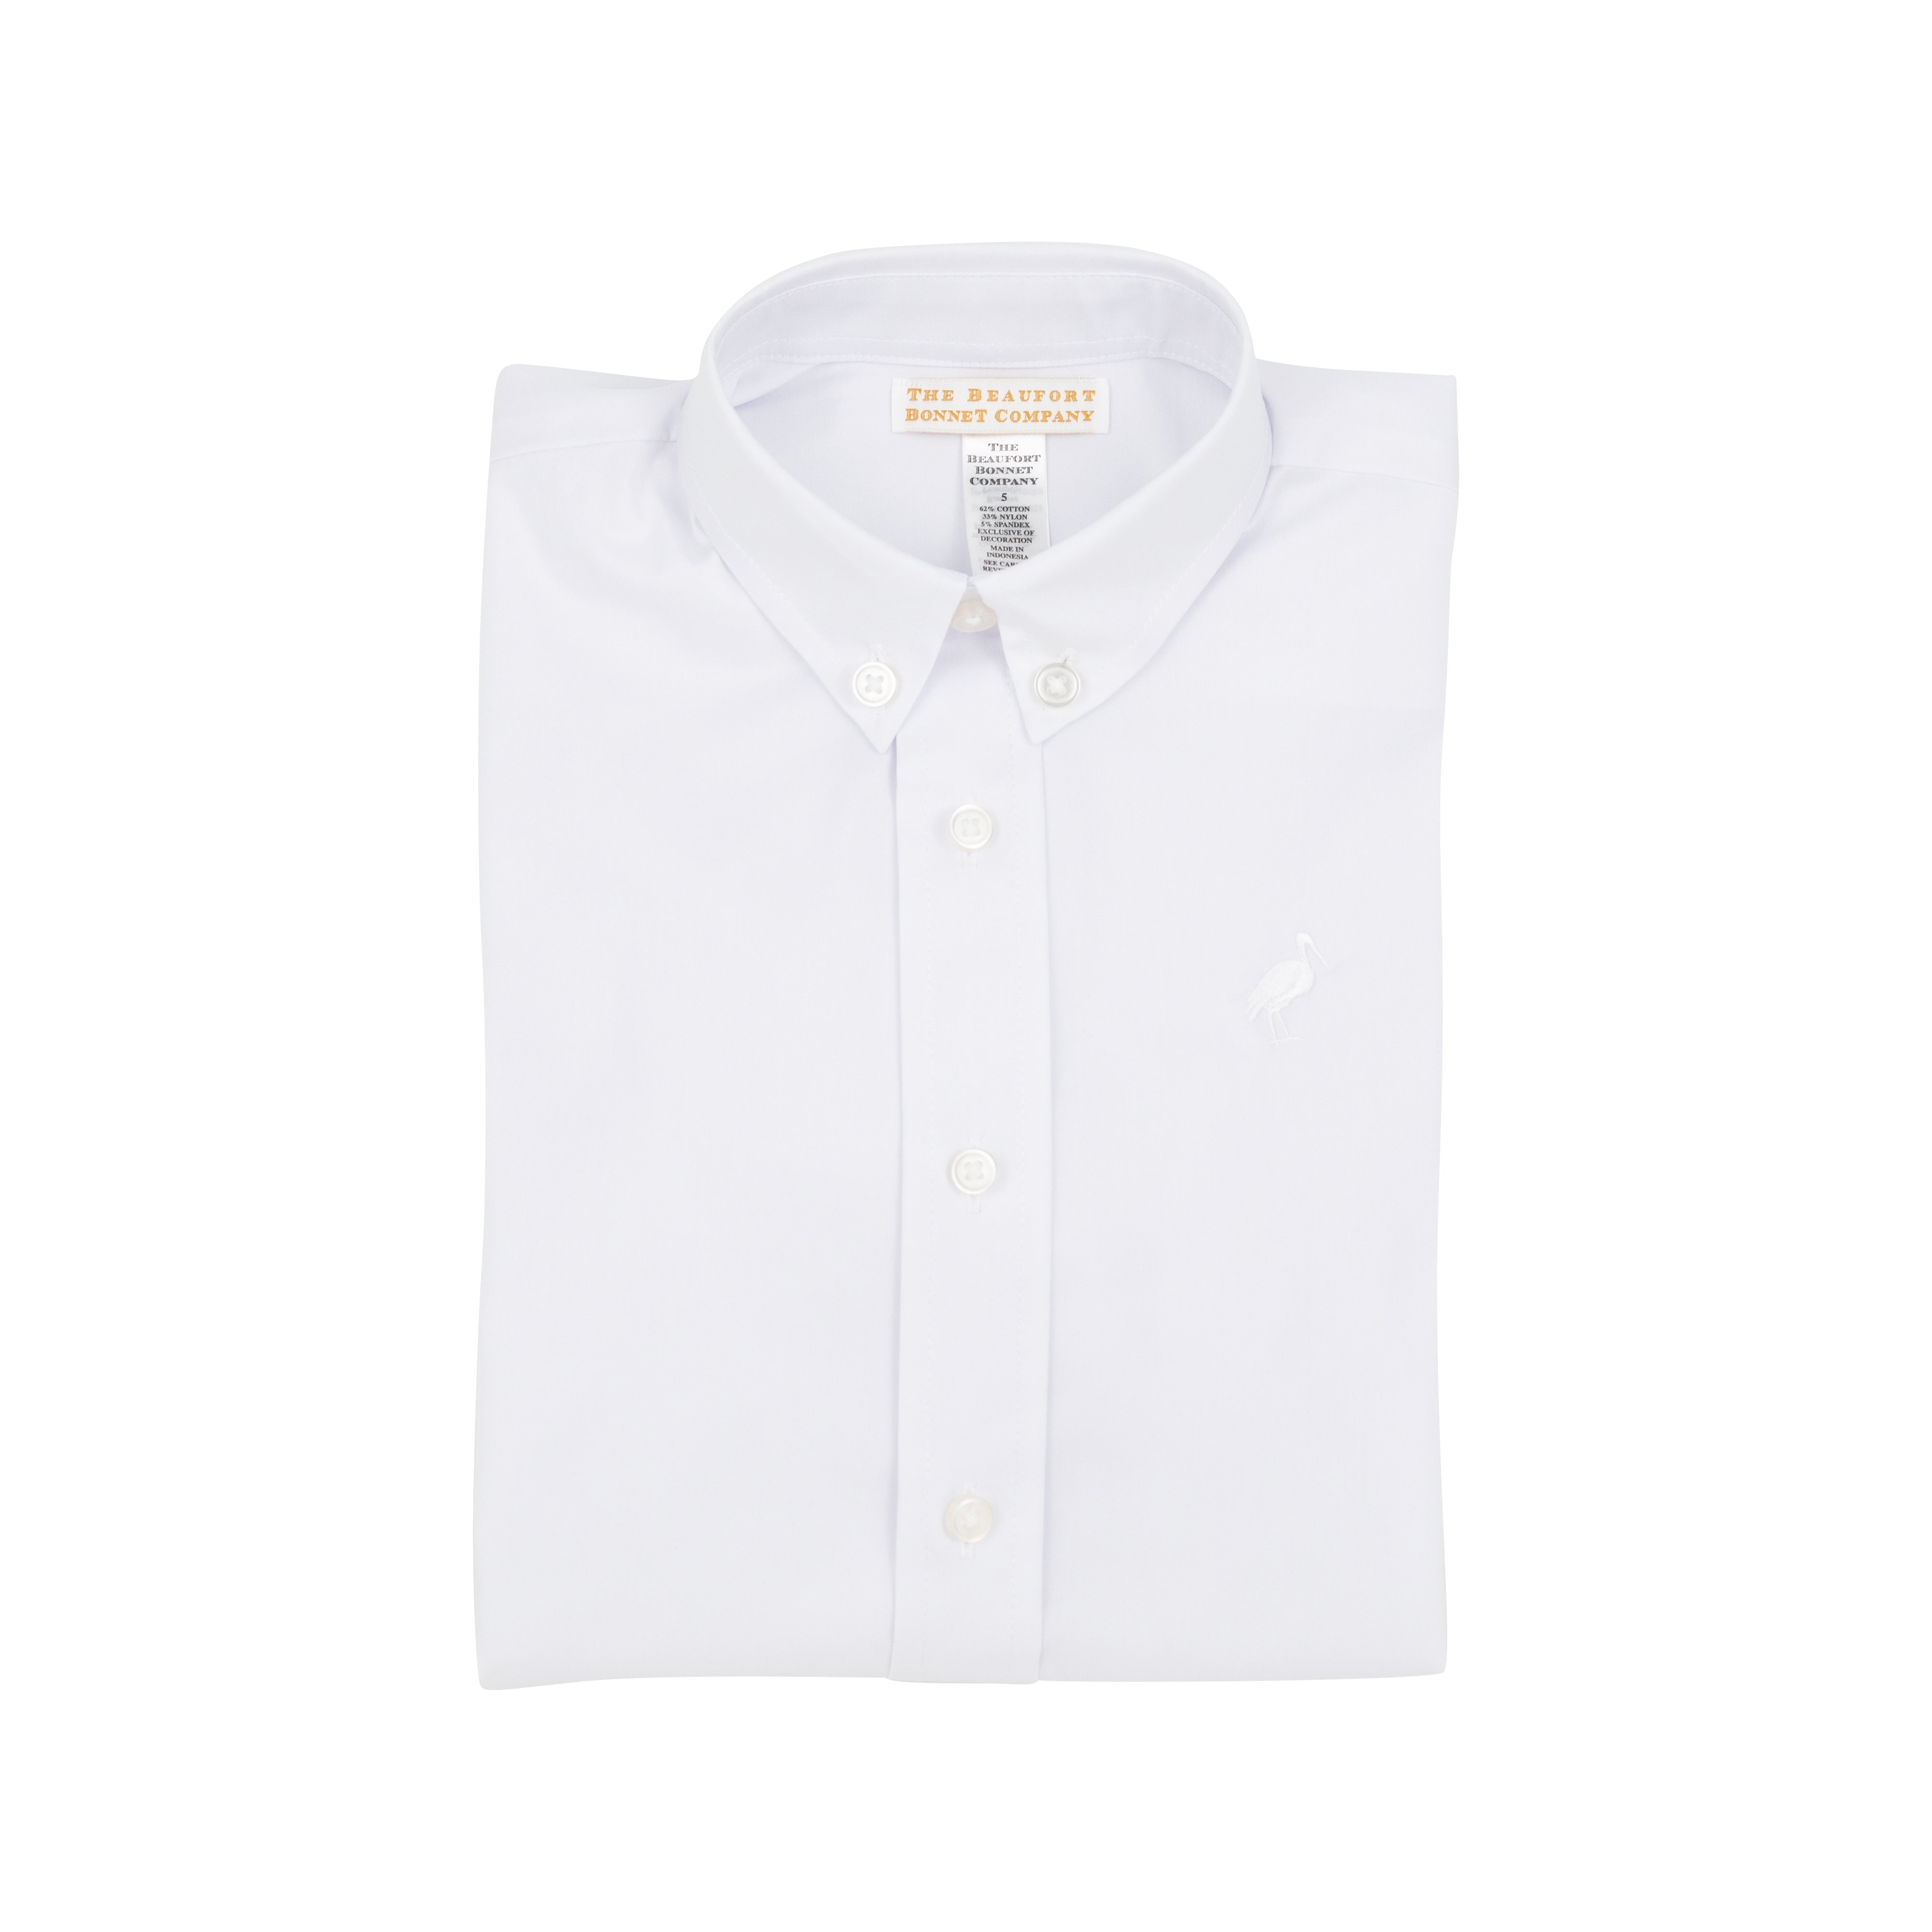 Dean's List Dress Shirt (Oxford) - Worth Avenue White with Worth